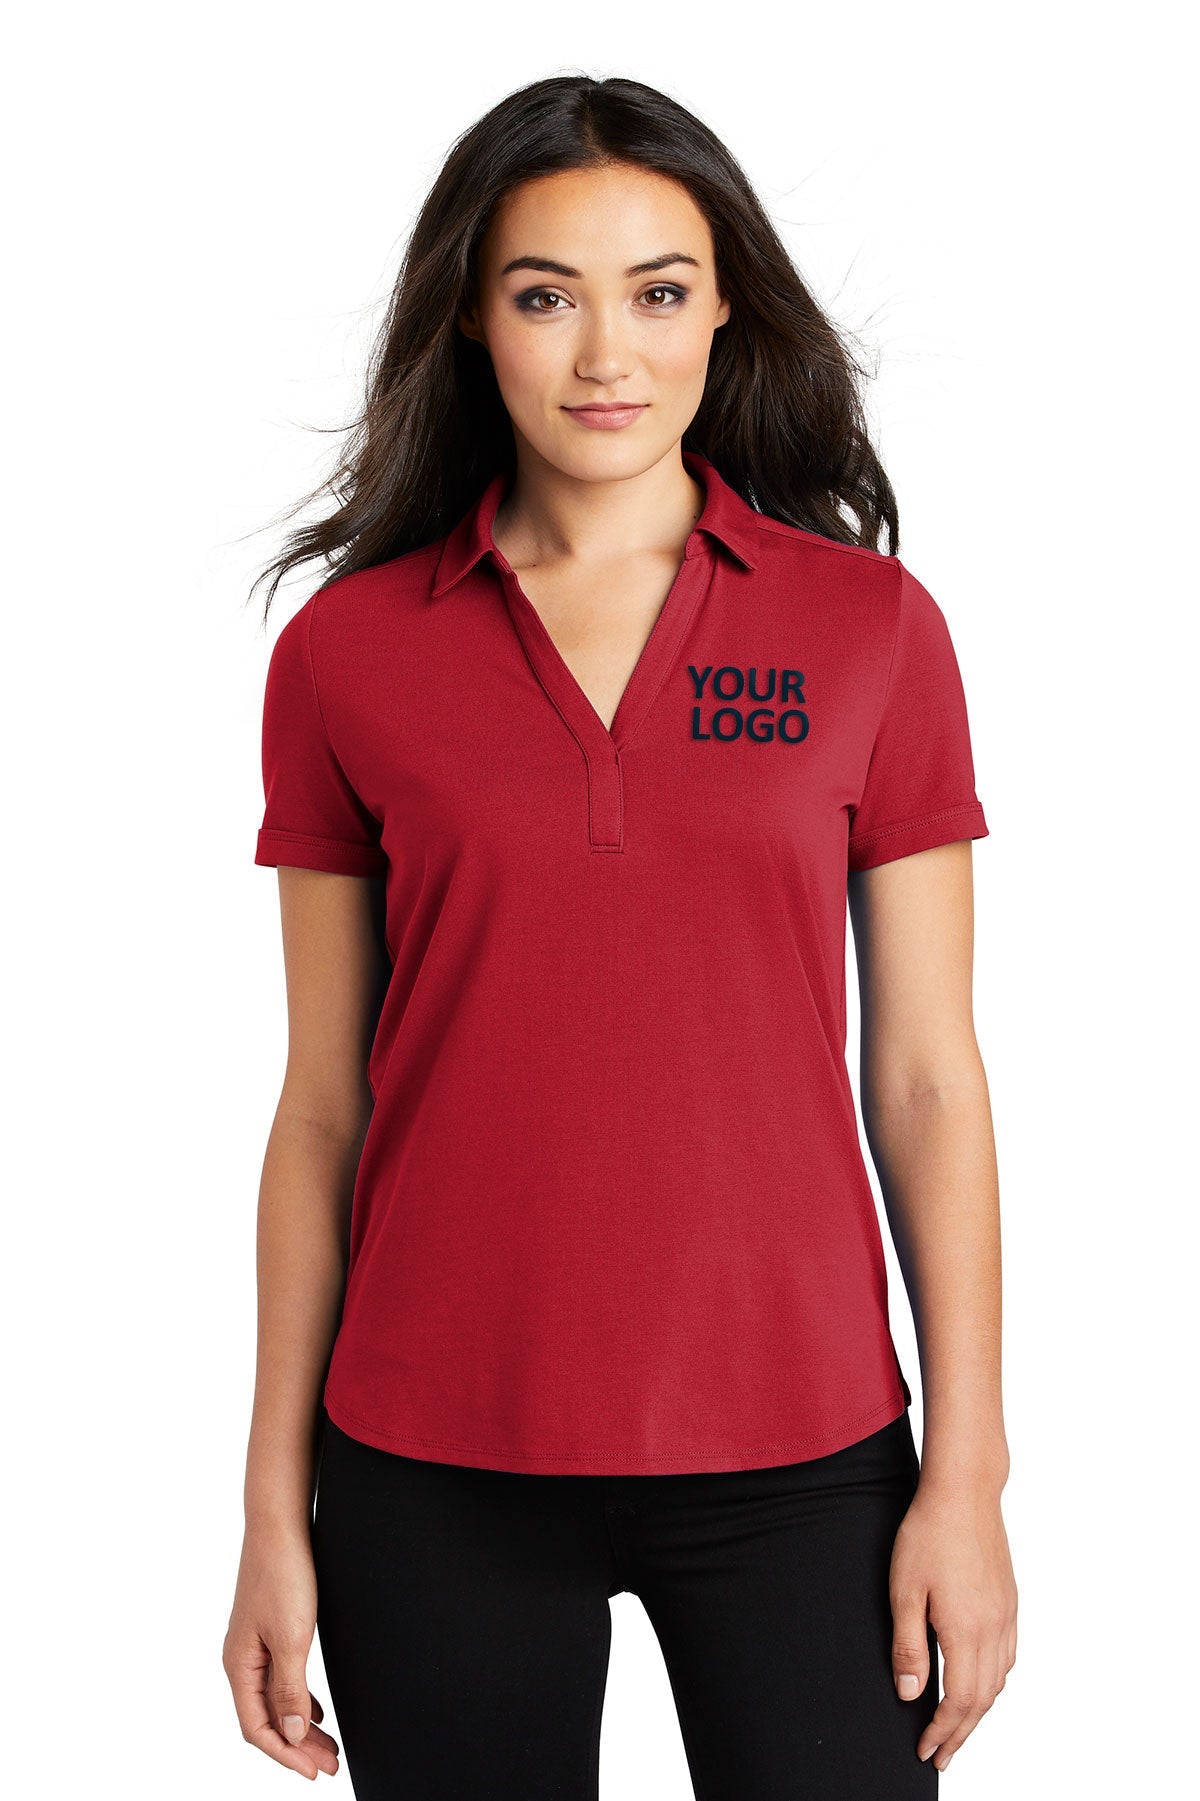 OGIO Signal Red LOG138 polo shirts with company logo